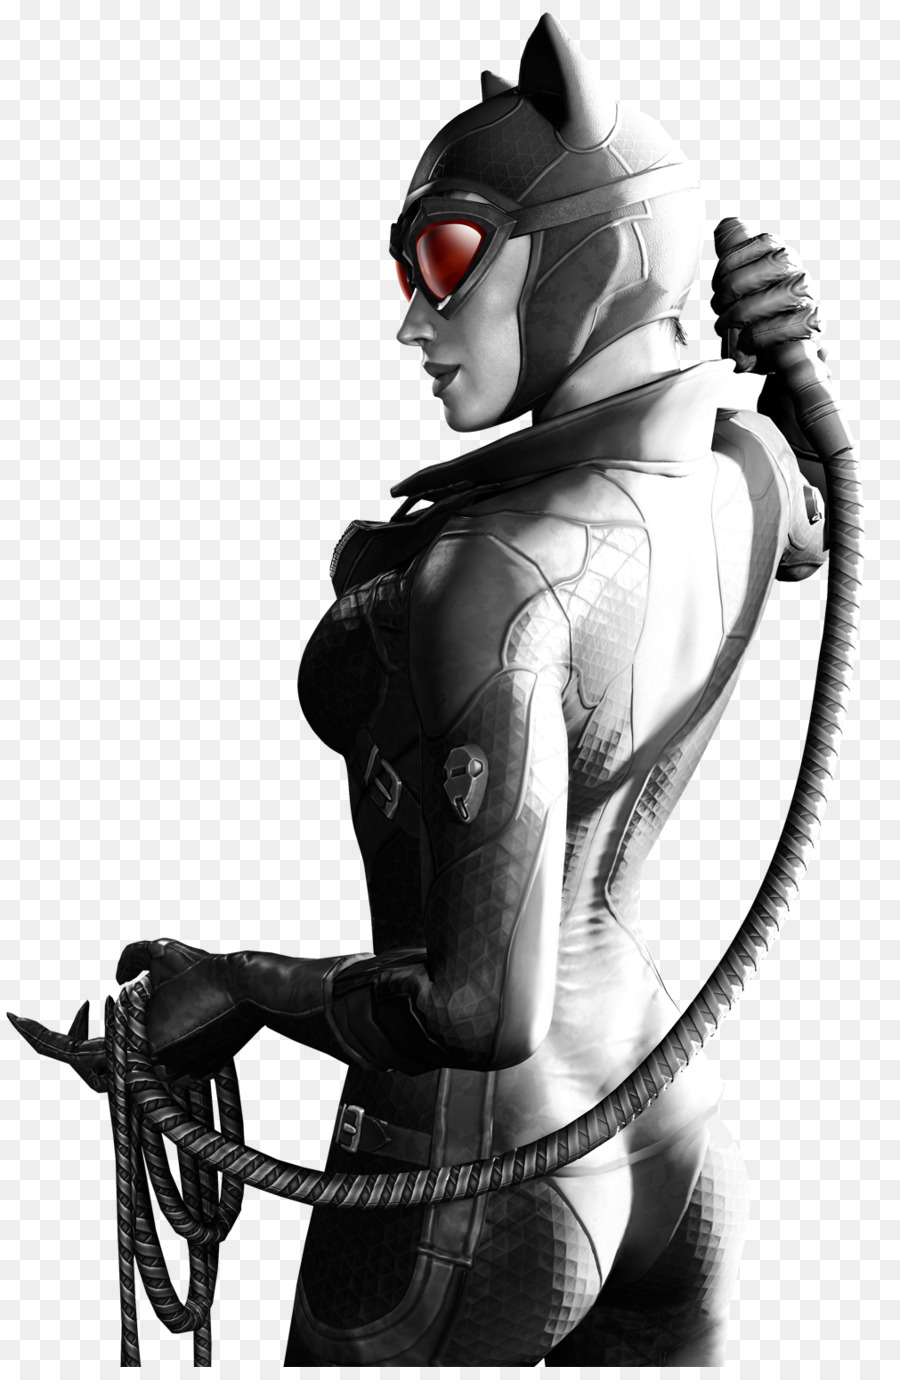 Batman: Arkham City Catwoman Joker Video game - Catwoman PNG Transparent Images png download - 1011*1536 - Free Transparent Batman Arkham City png Download.